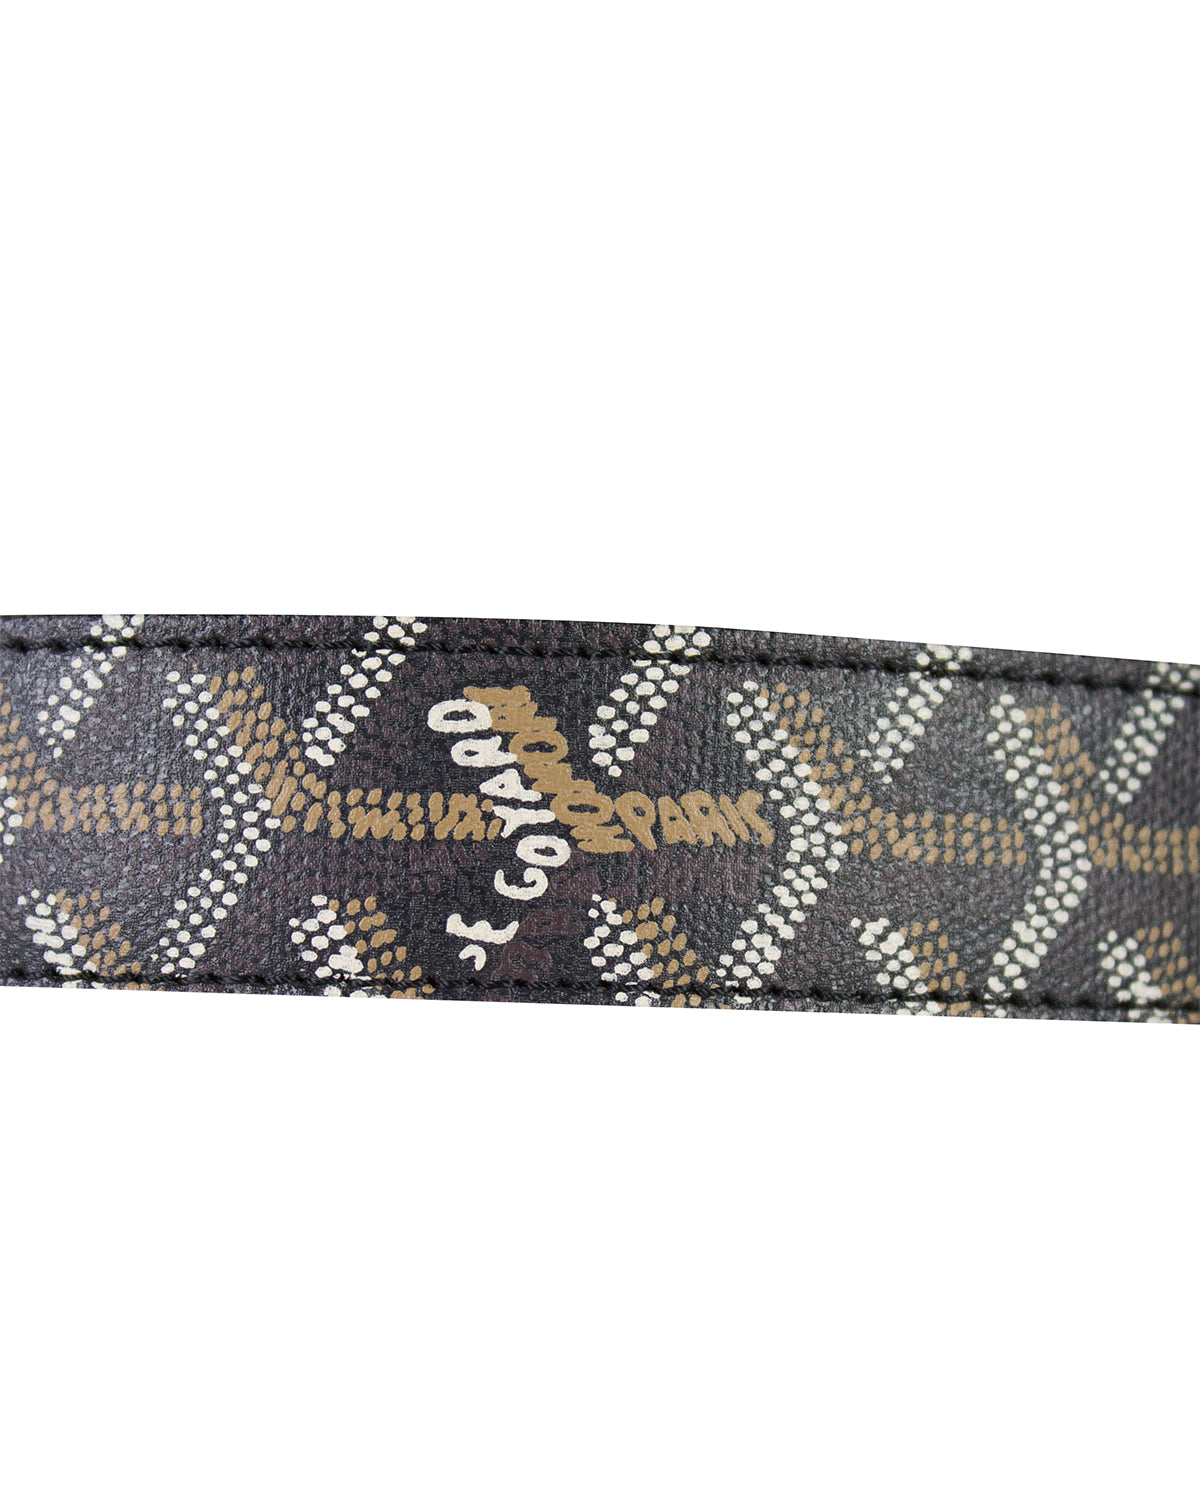 Goyard Dog Collar - For Sale on 1stDibs